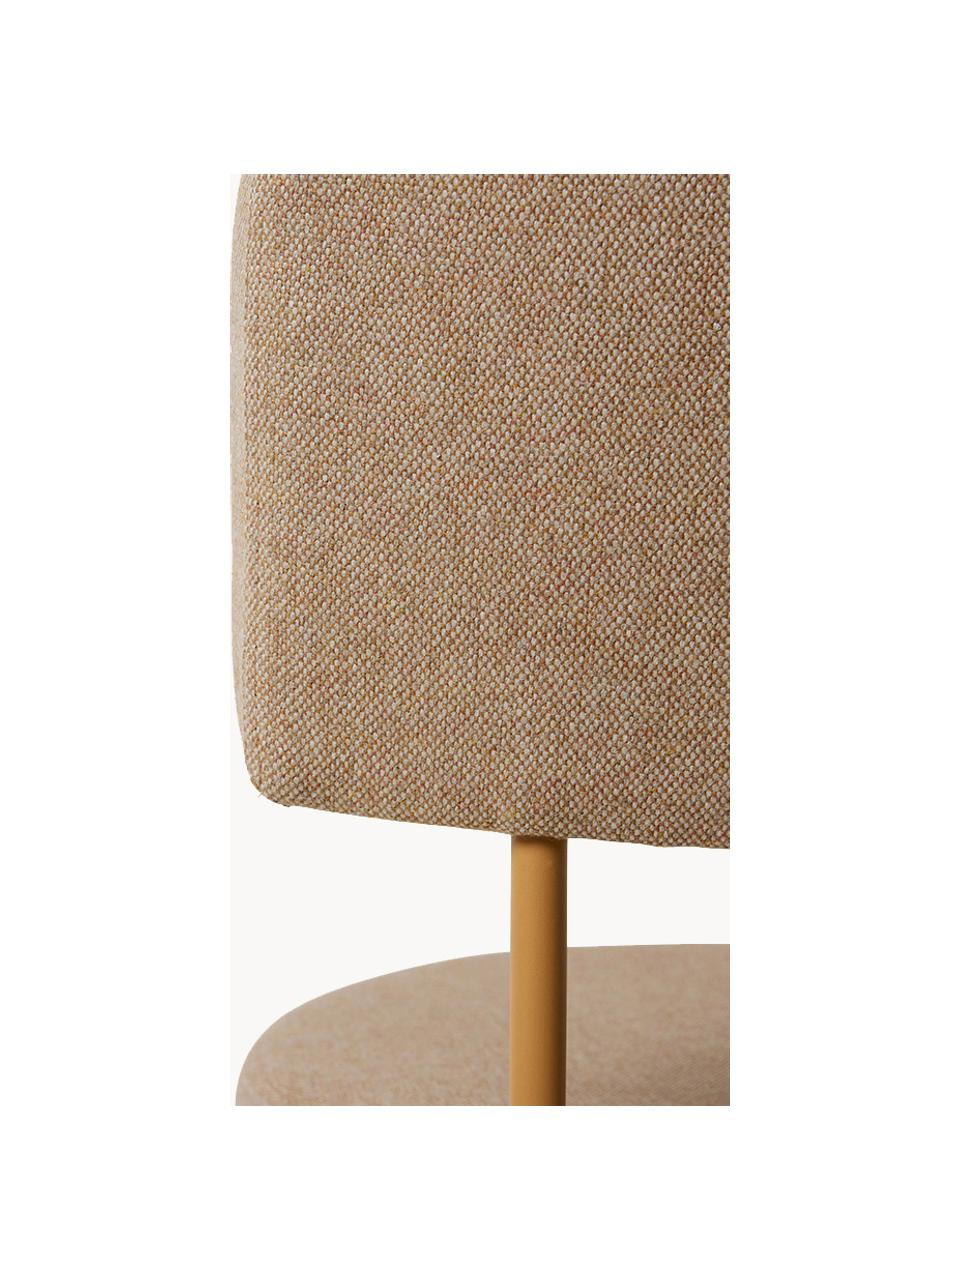 Chaise rembourrée Sedia, Tissu beige, larg. 46 x prof. 54 cm